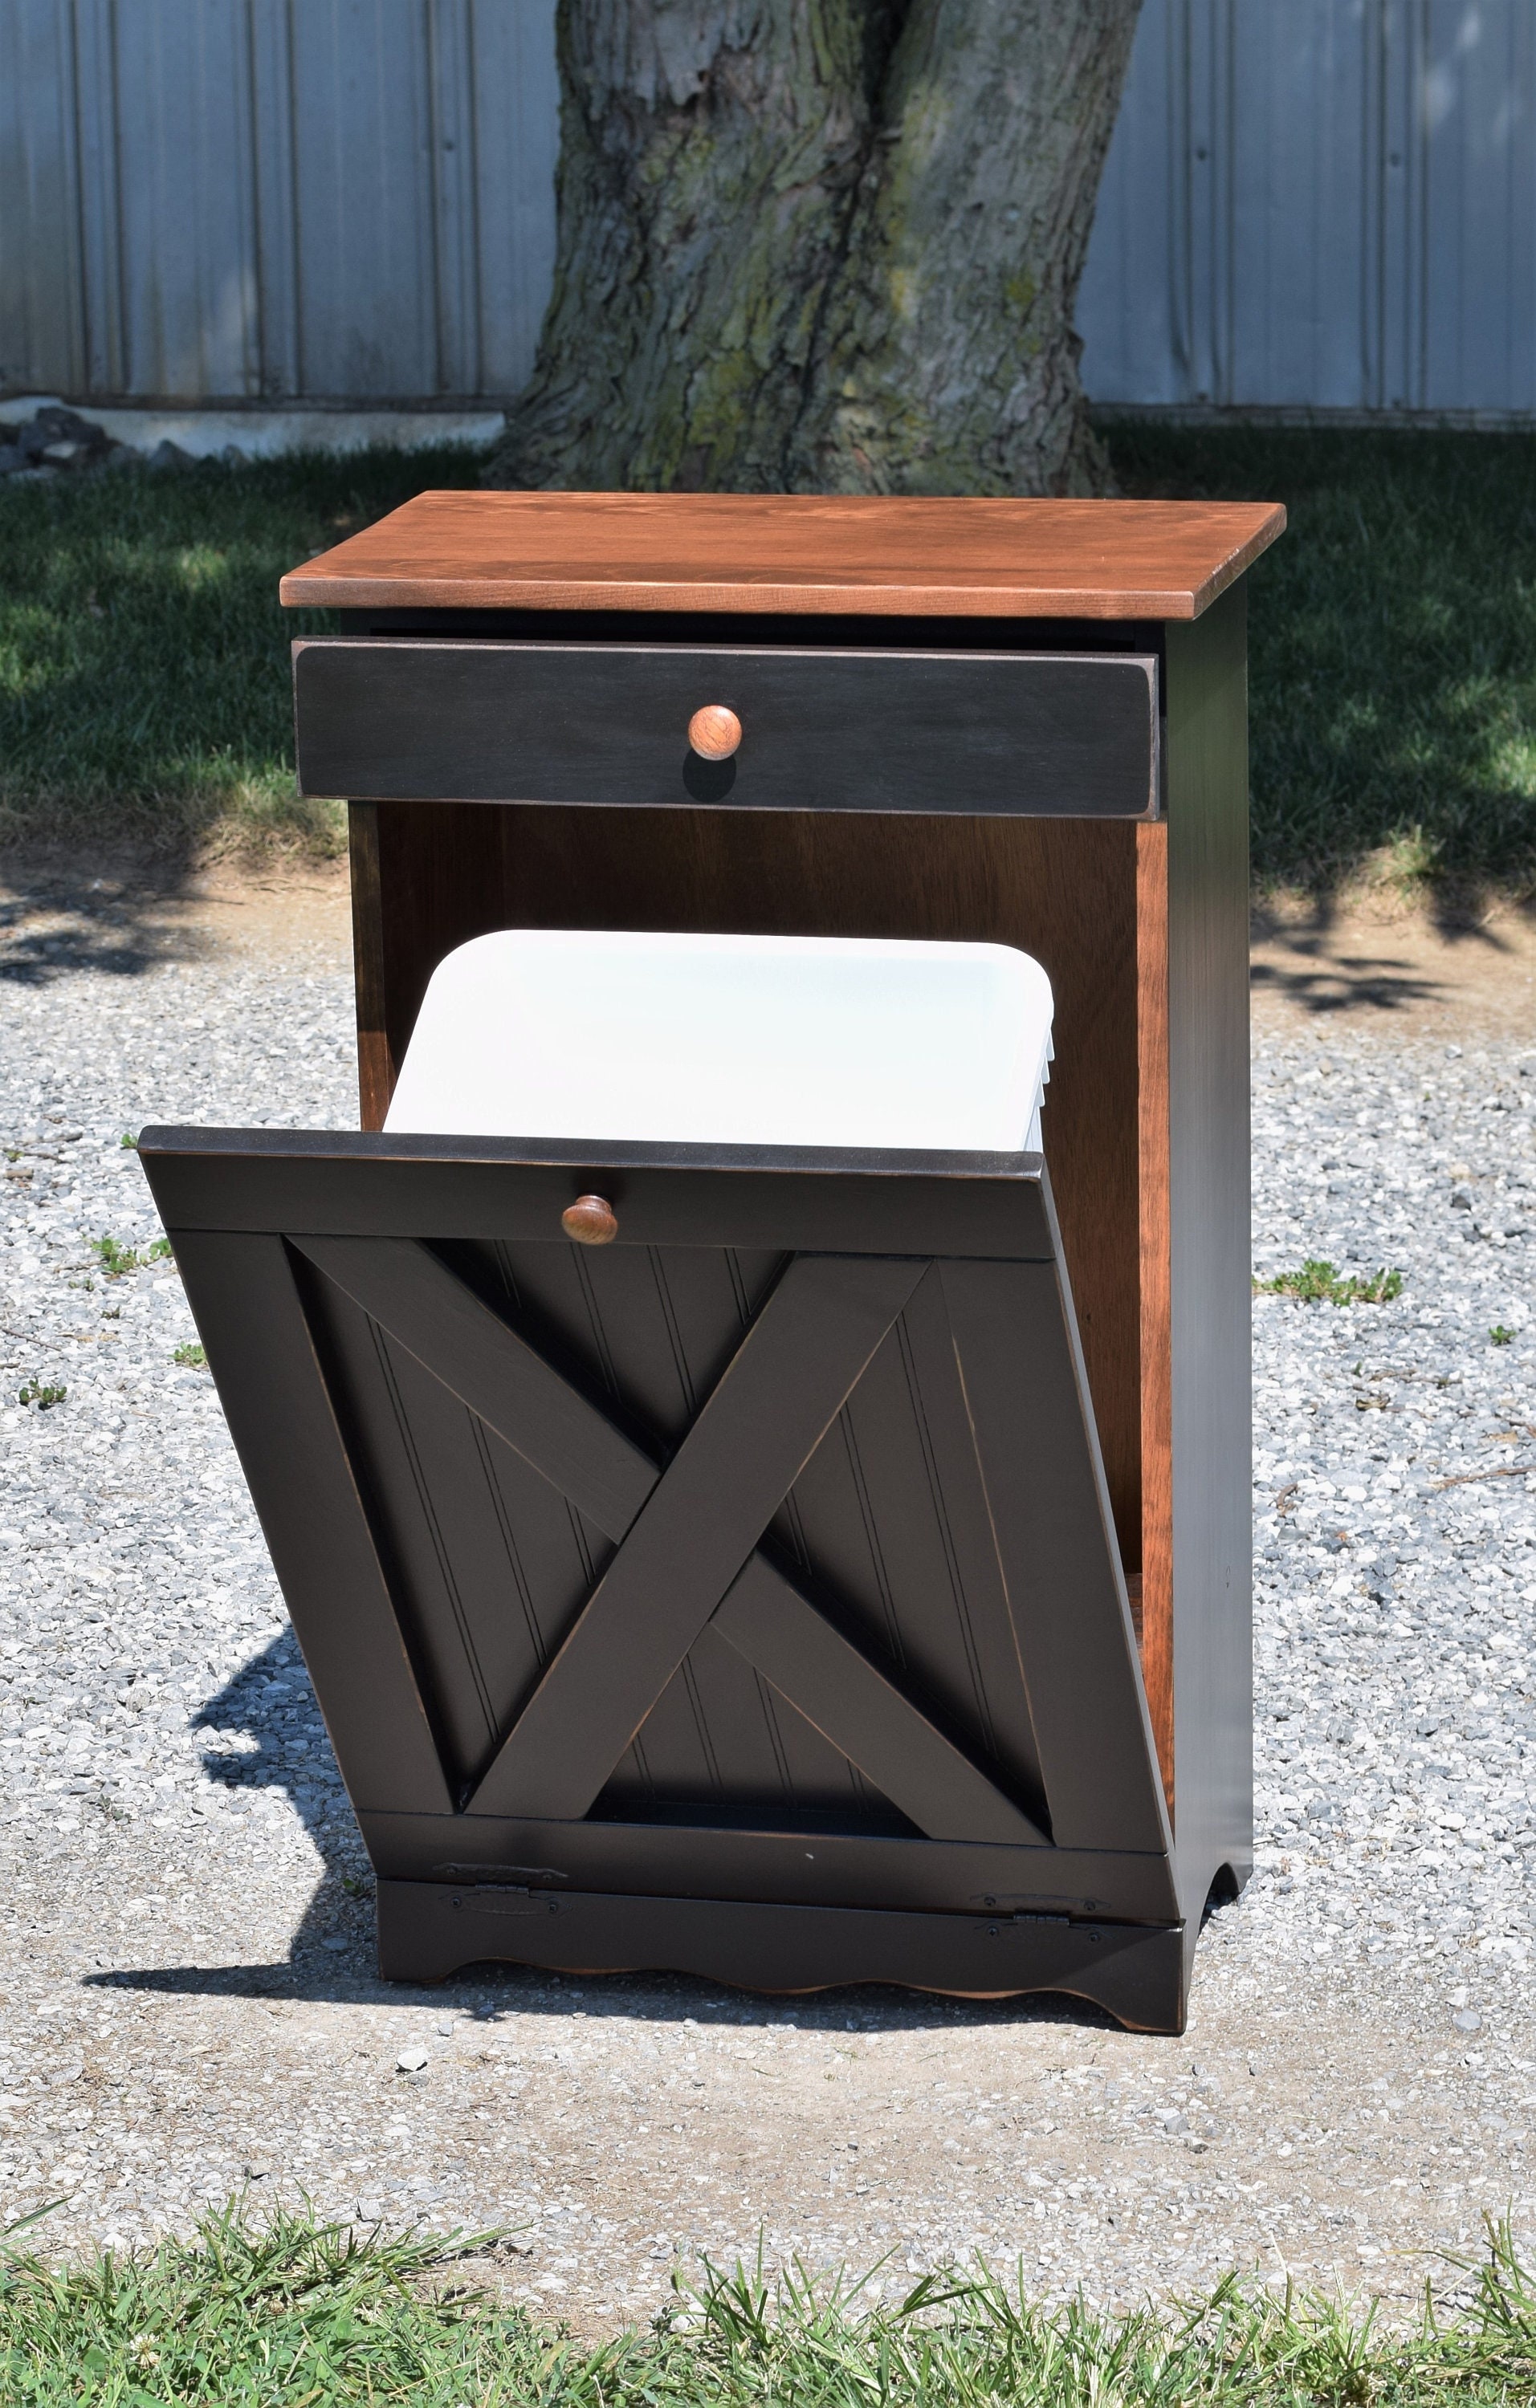 Farmhouse Trash Bin Cabinet from DutchCrafters Amish Furniture